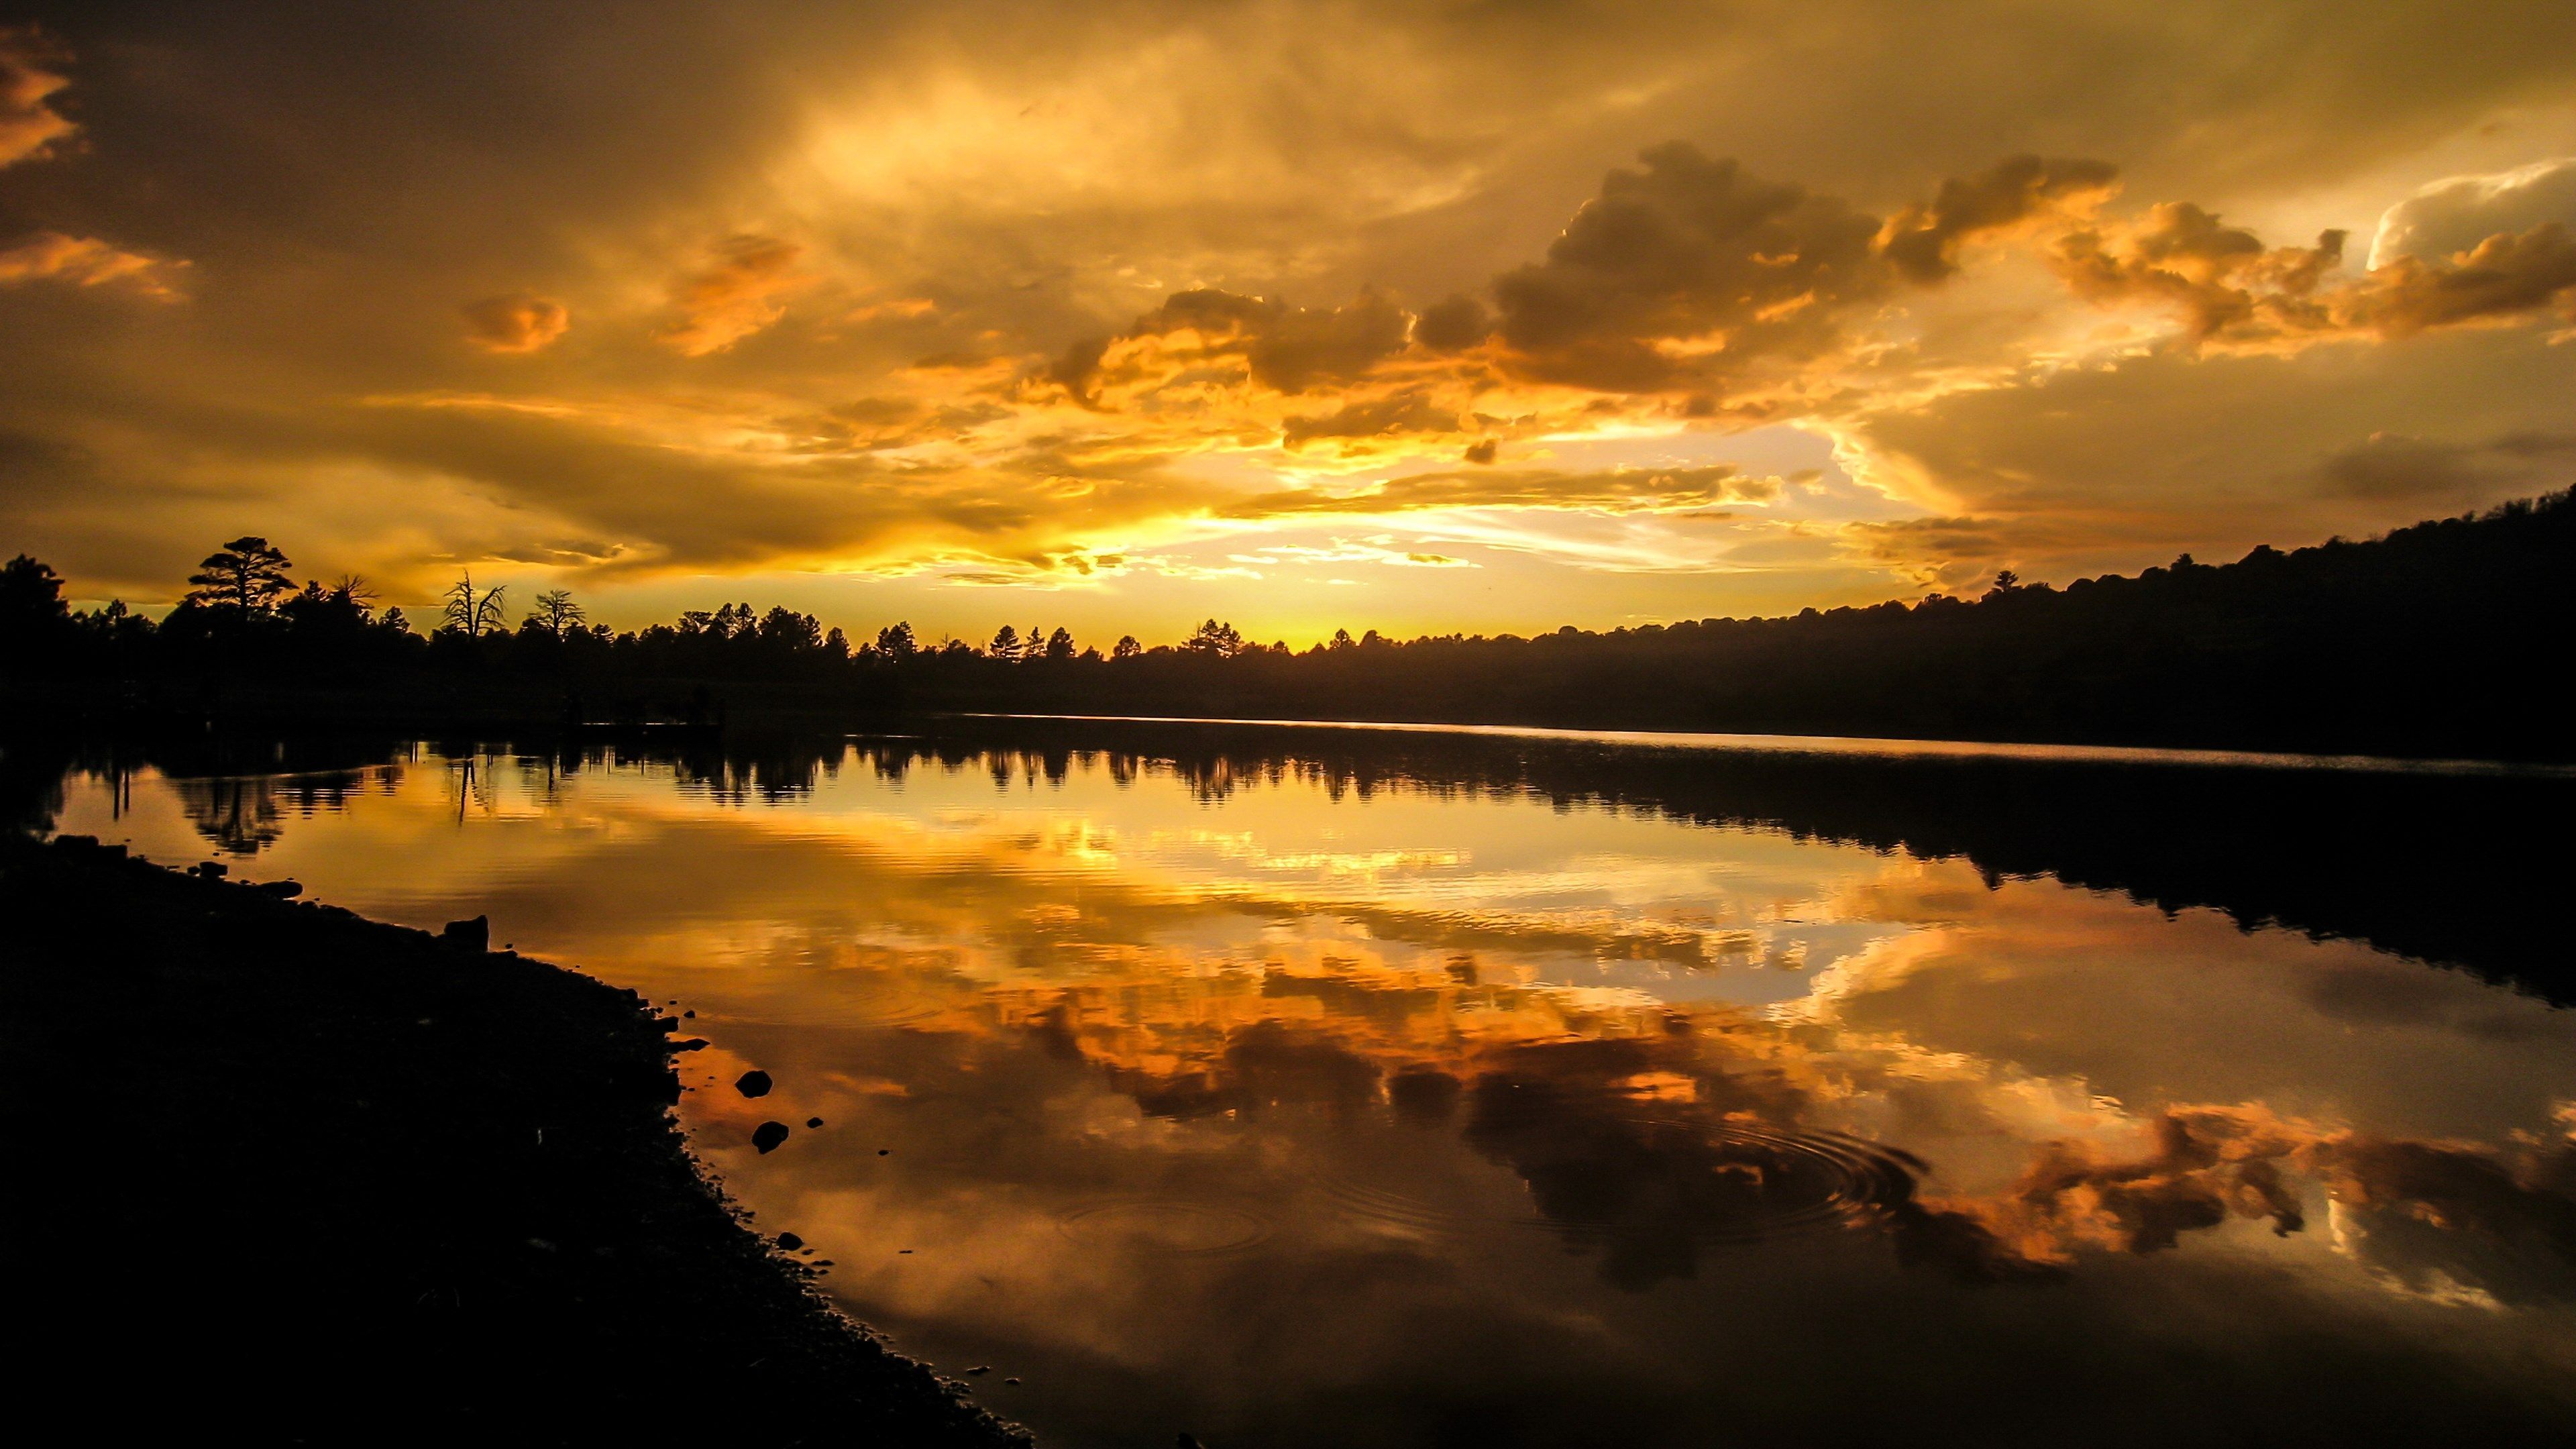 4k pc HD wallpaper download (3840x2160). Sunset wallpaper, Nature wallpaper, Lake sunset